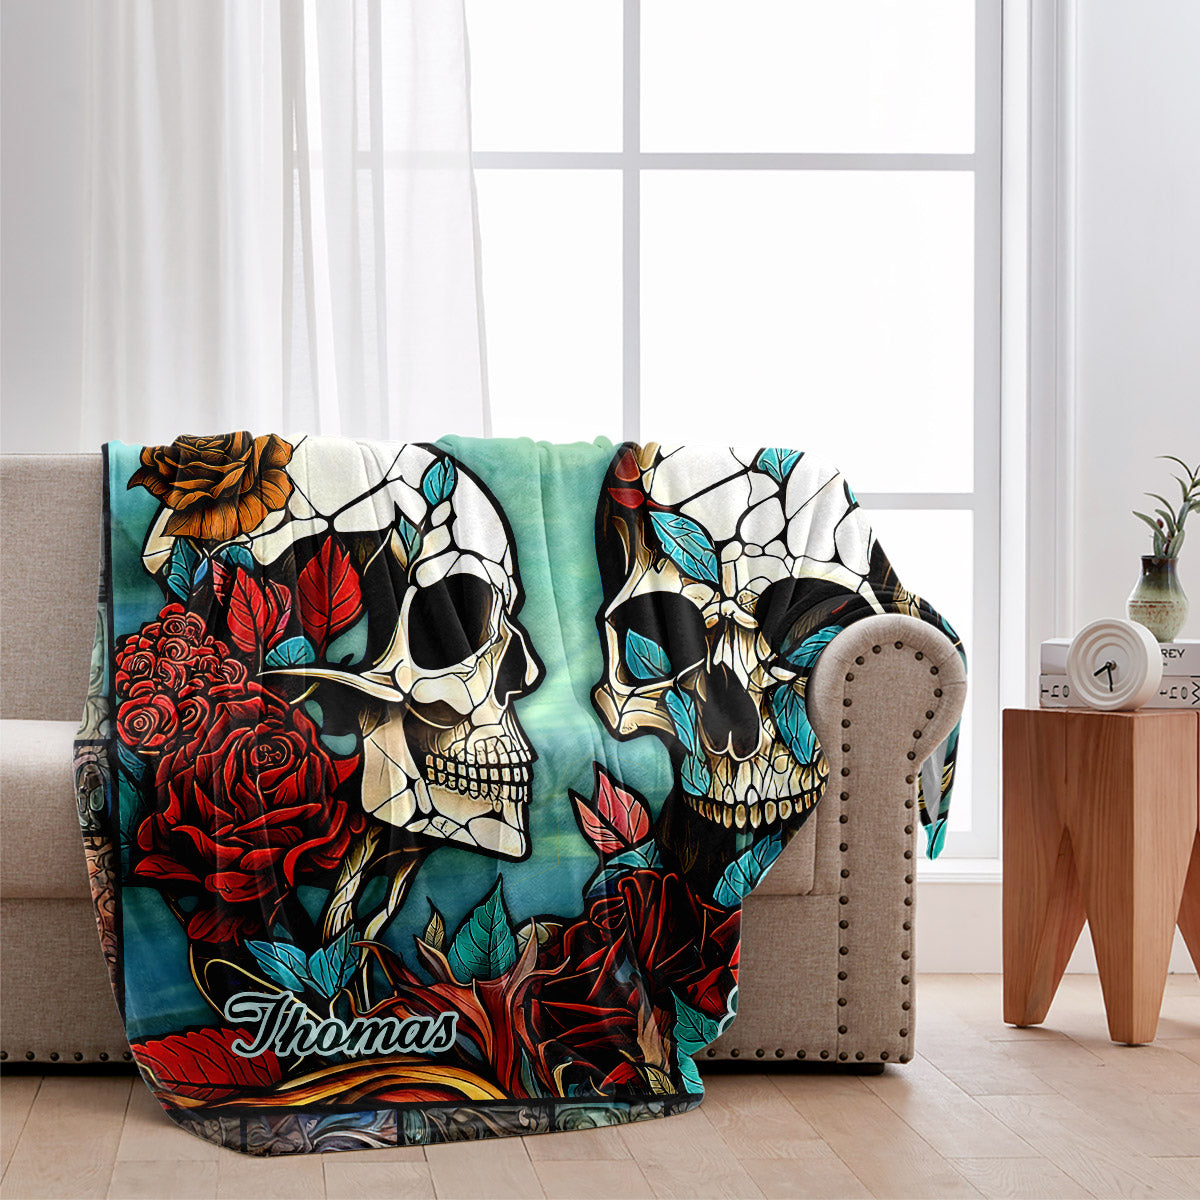 Skull Couple - Skull gift for husband, wife, boyfriend, girlfriend - Personalized Blanket